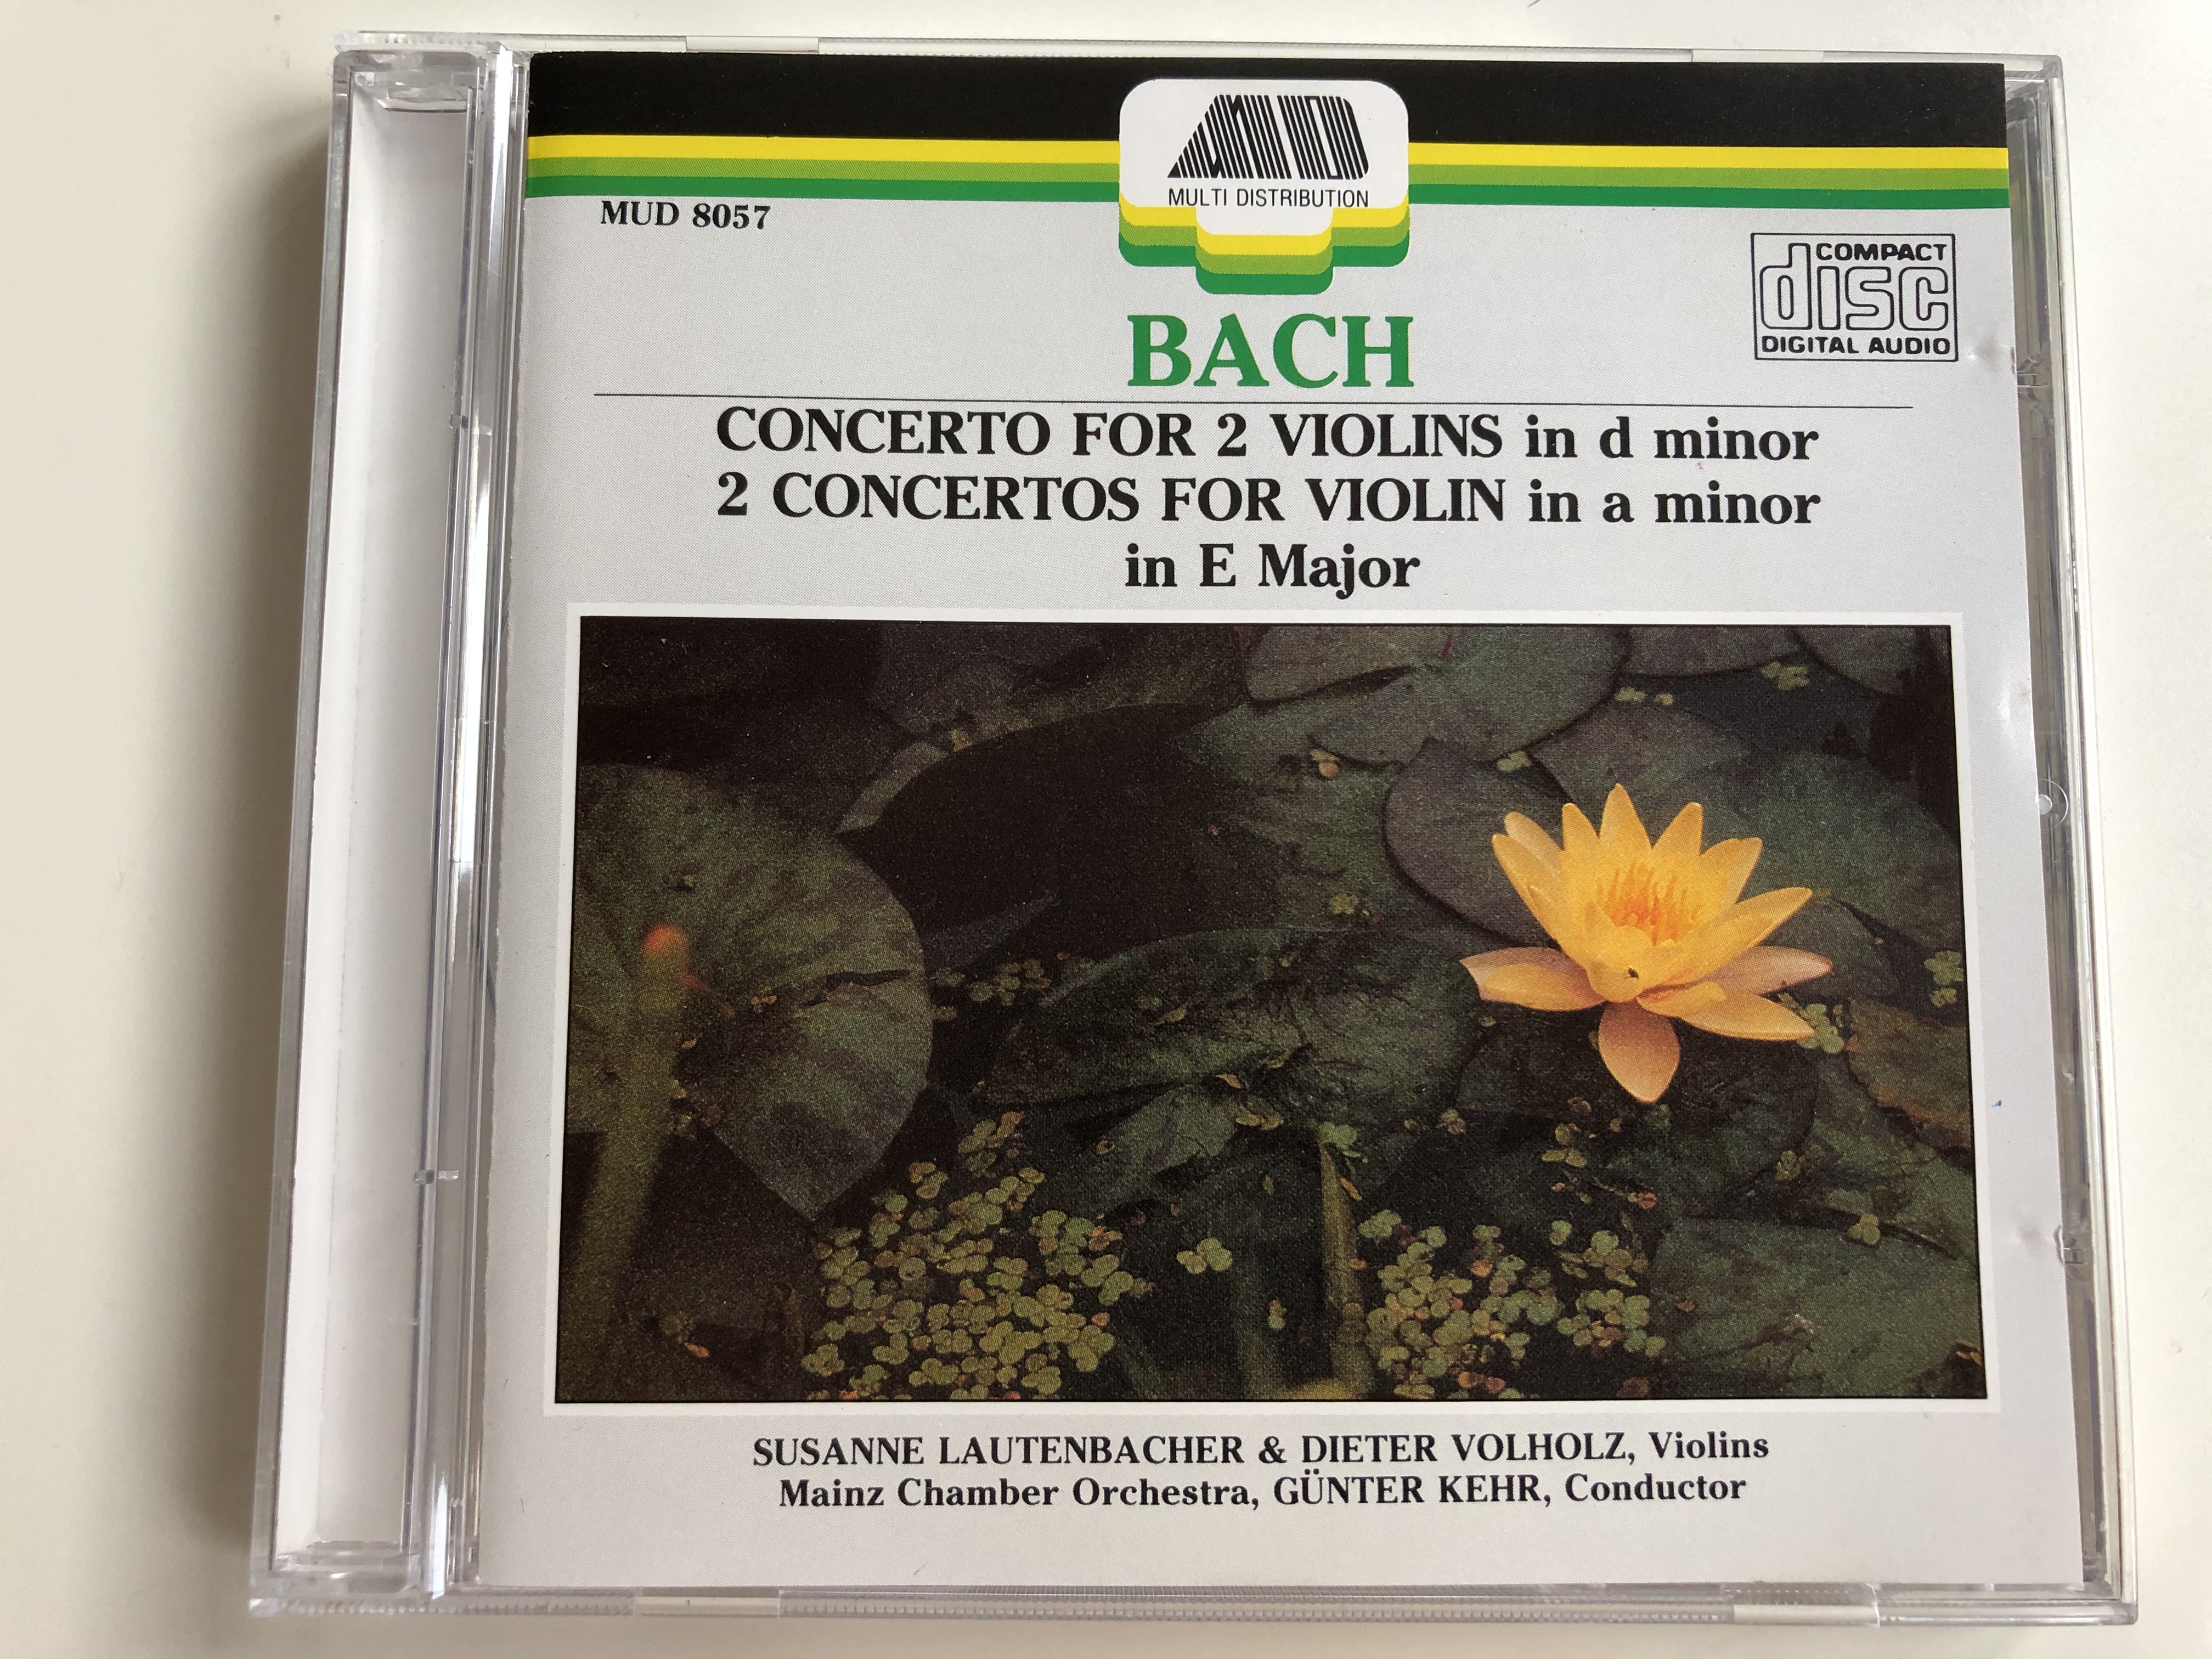 bach-concerto-for-2-violins-in-d-minor-2-concertos-for-violin-in-a-minor-in-e-major-violins-susanne-lautenbacher-dieter-volholz-conductor-gunter-kehr-mainz-chamber-ochestra-multi-distribut-1-.jpg